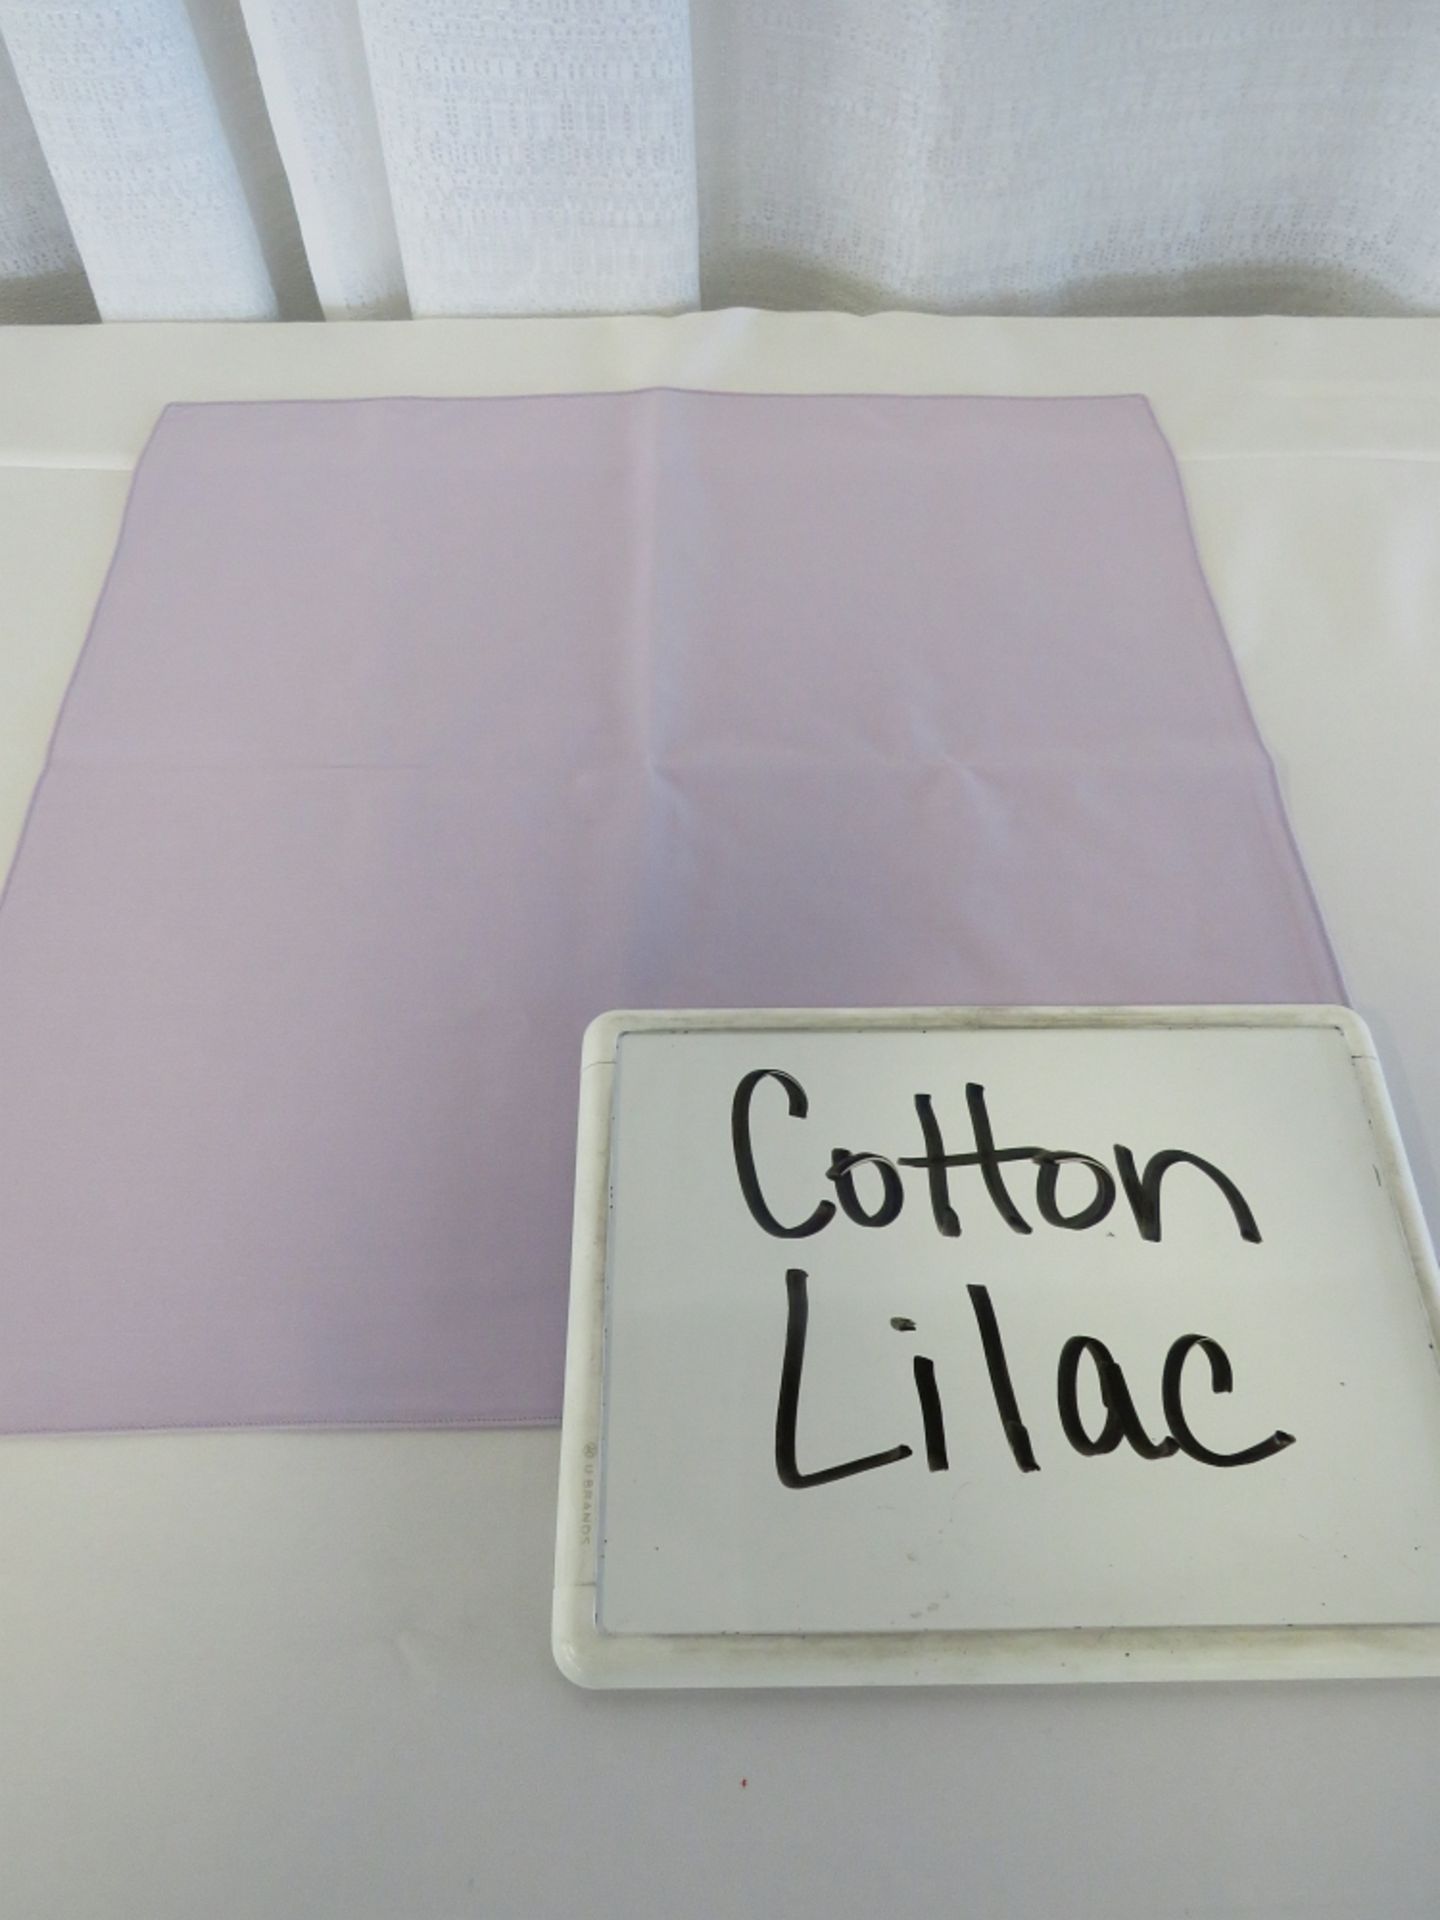 Napkin, Cotton Lilac